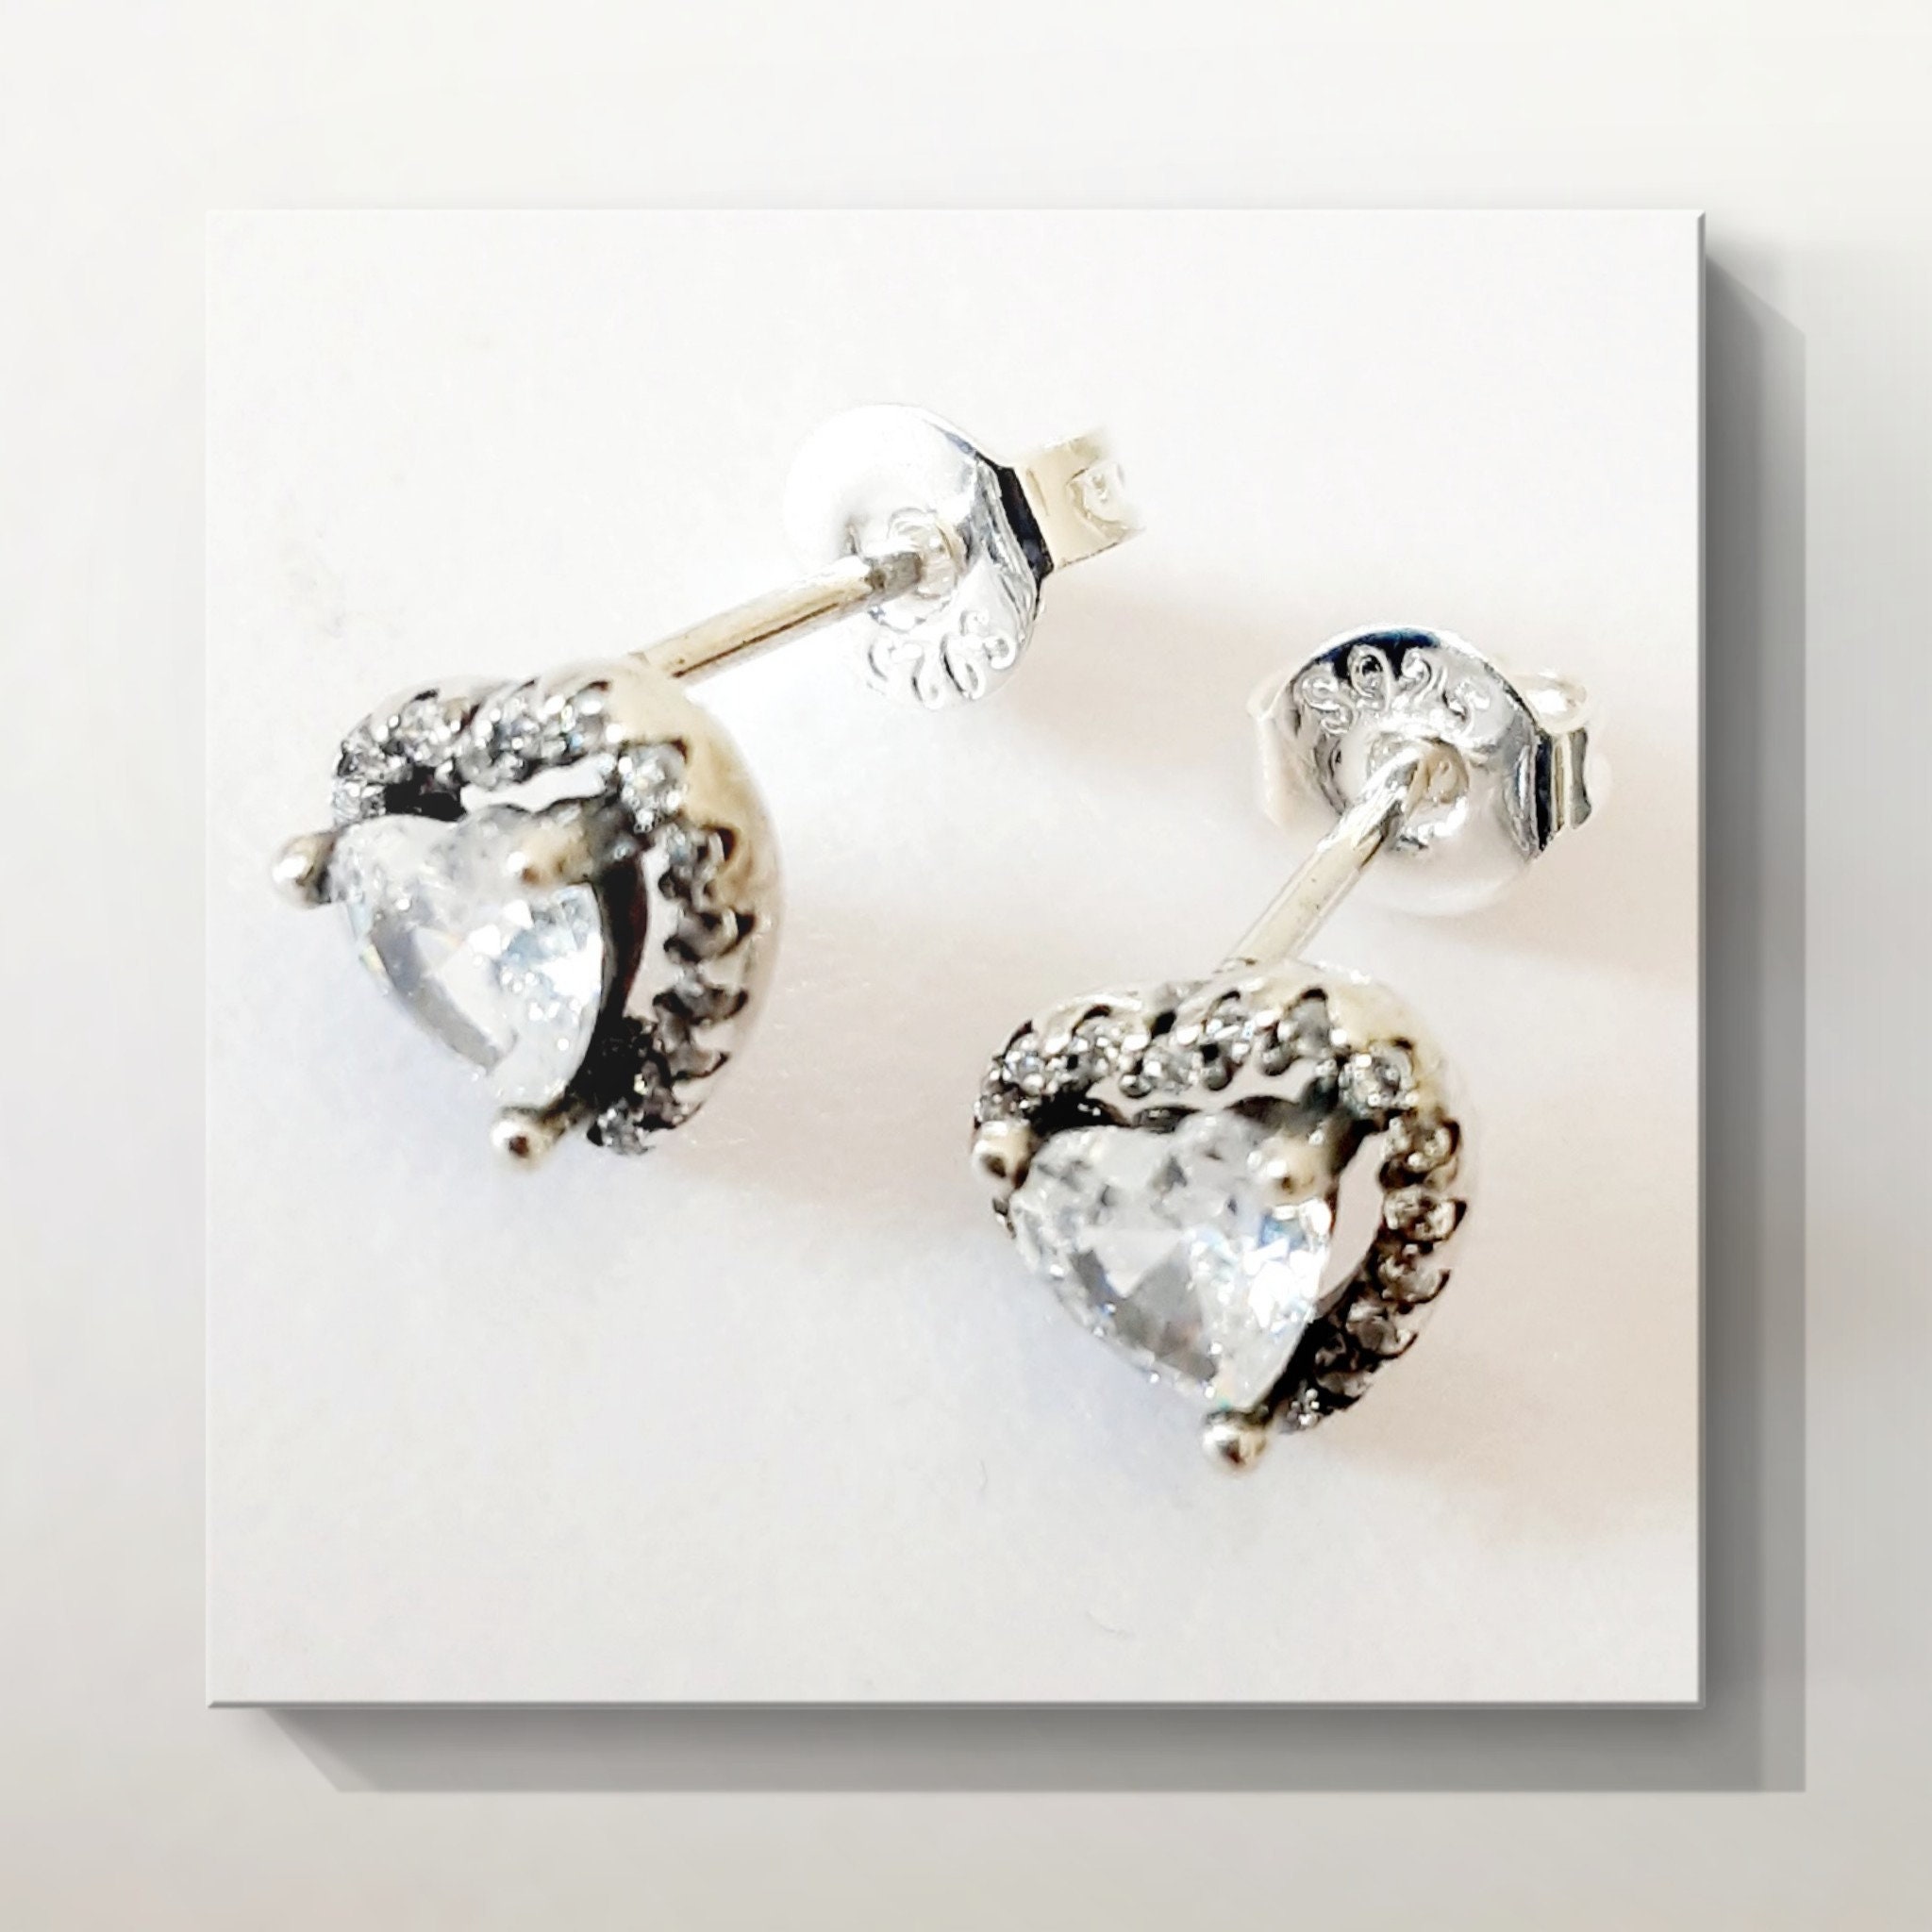 Elevated Heart Stud Earrings, Sterling silver